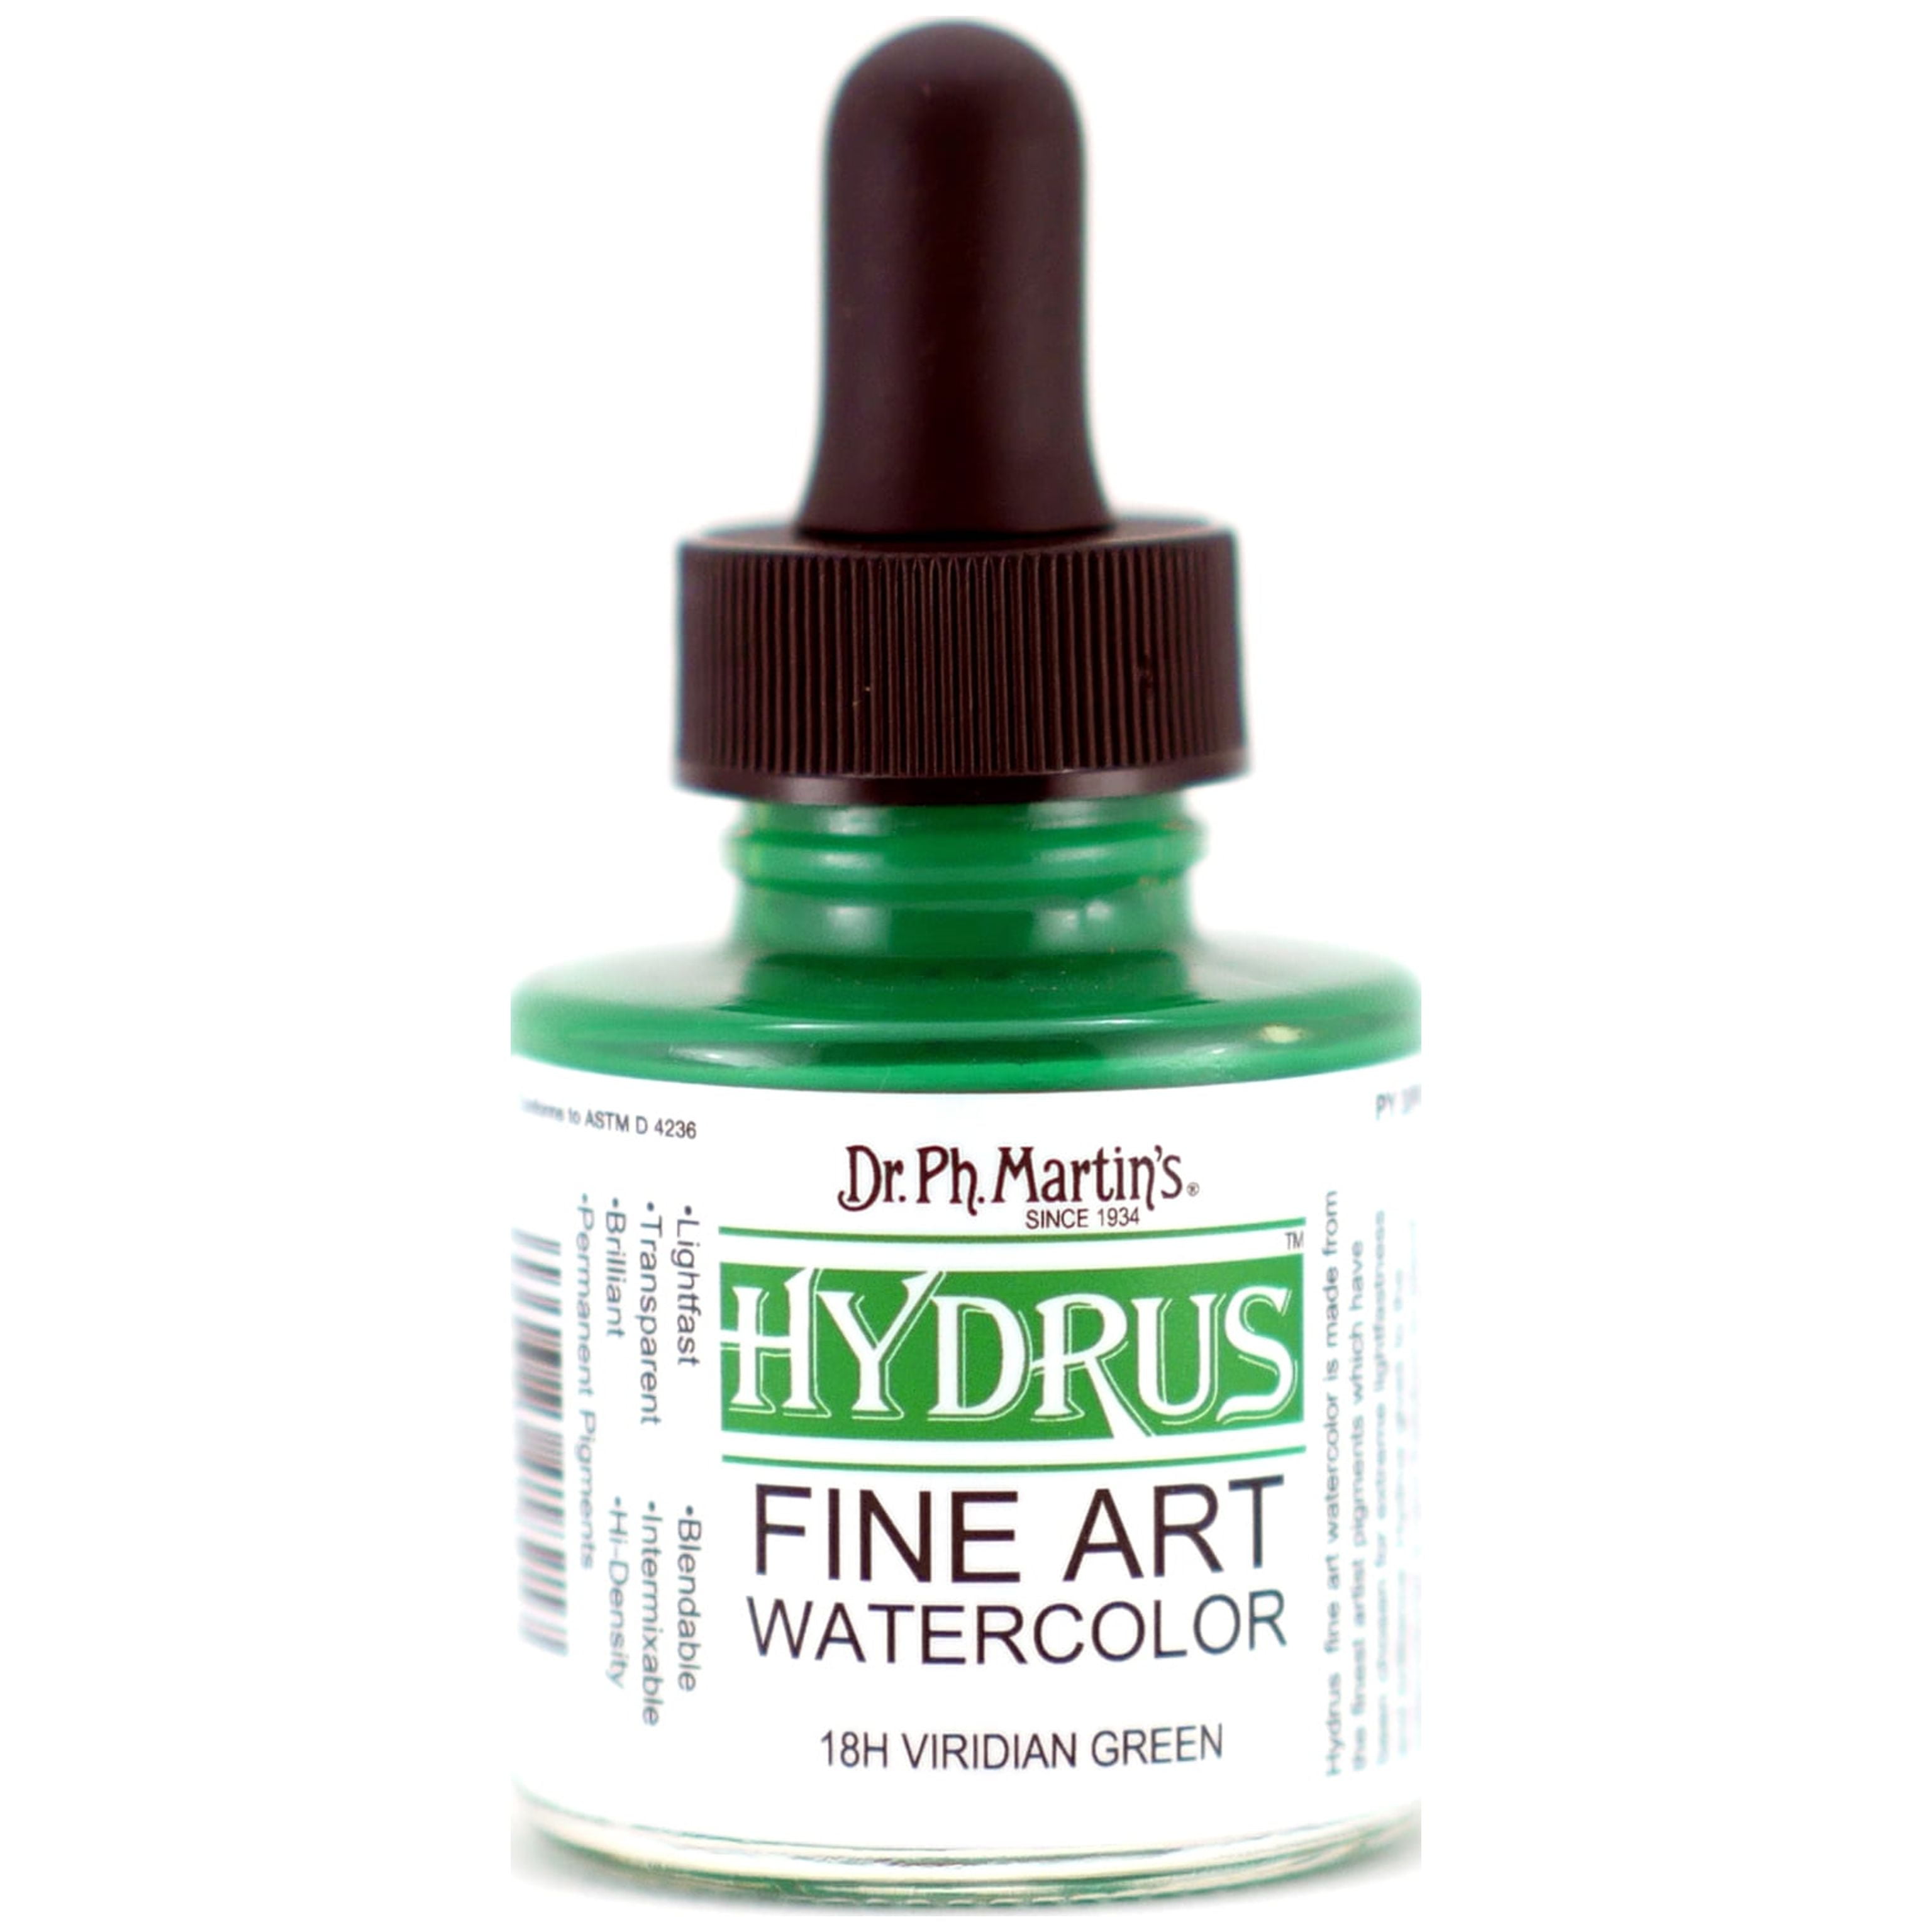 Dr. Ph. Martin's Hydrus Fine Art Watercolor, 1.0 oz, Viridian Green (18H) 